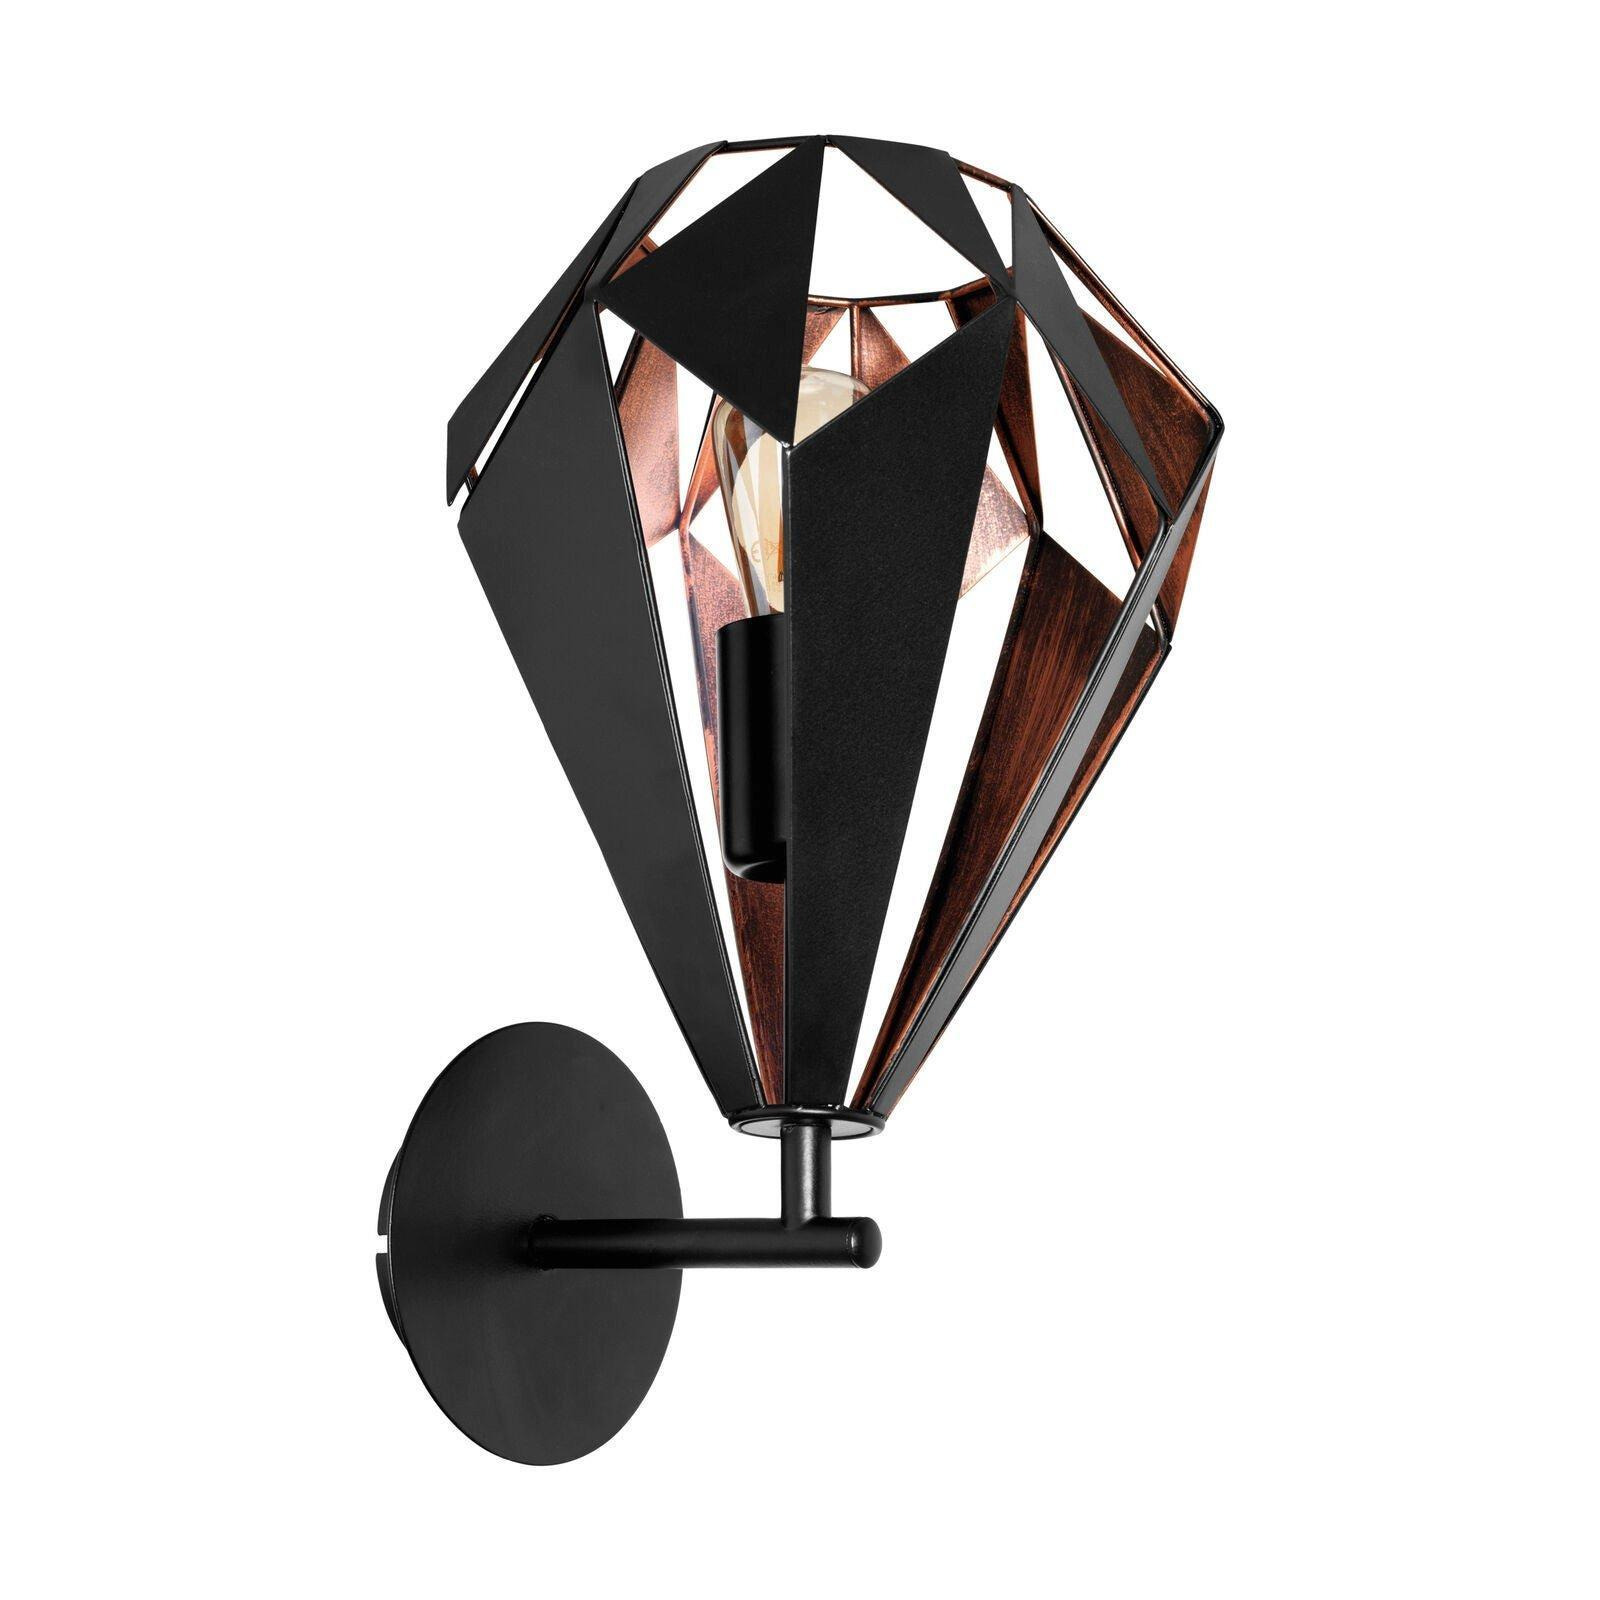 LED Wall Light / Sconce Black & Antique Copper Shade 1 x 60W E27 Bulb - image 1